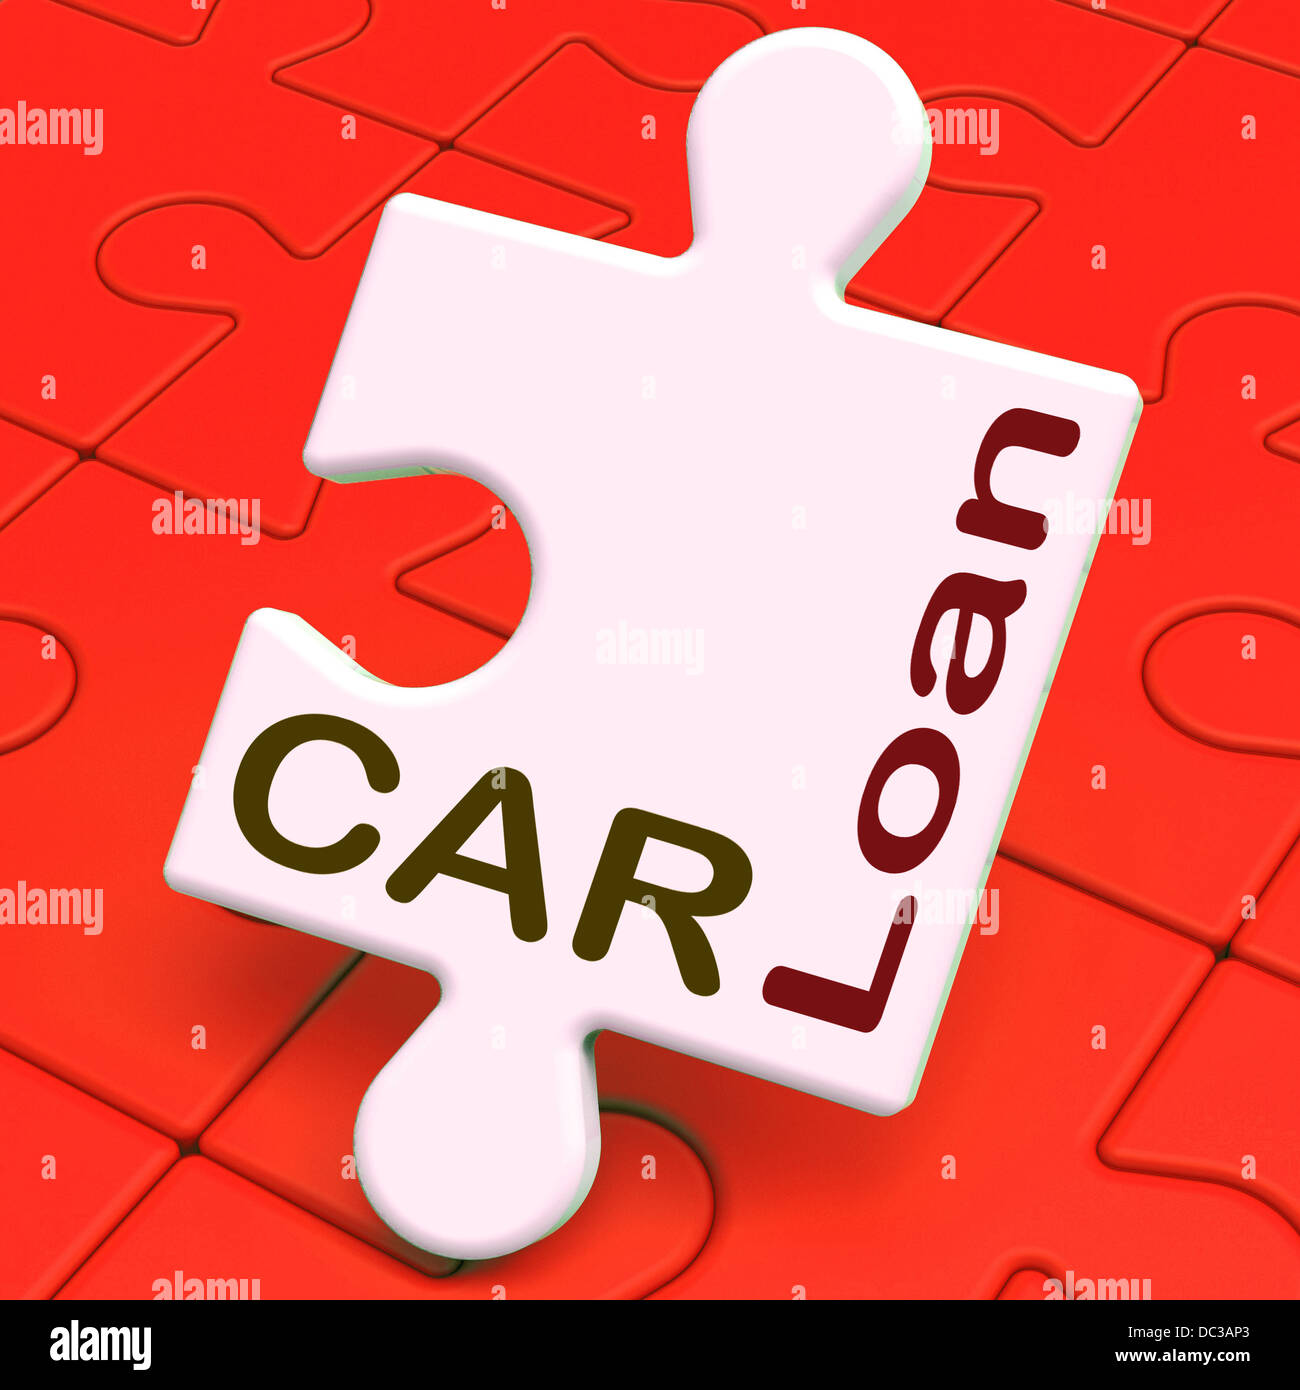 Car Loan Shows Auto Finance Stock Photo